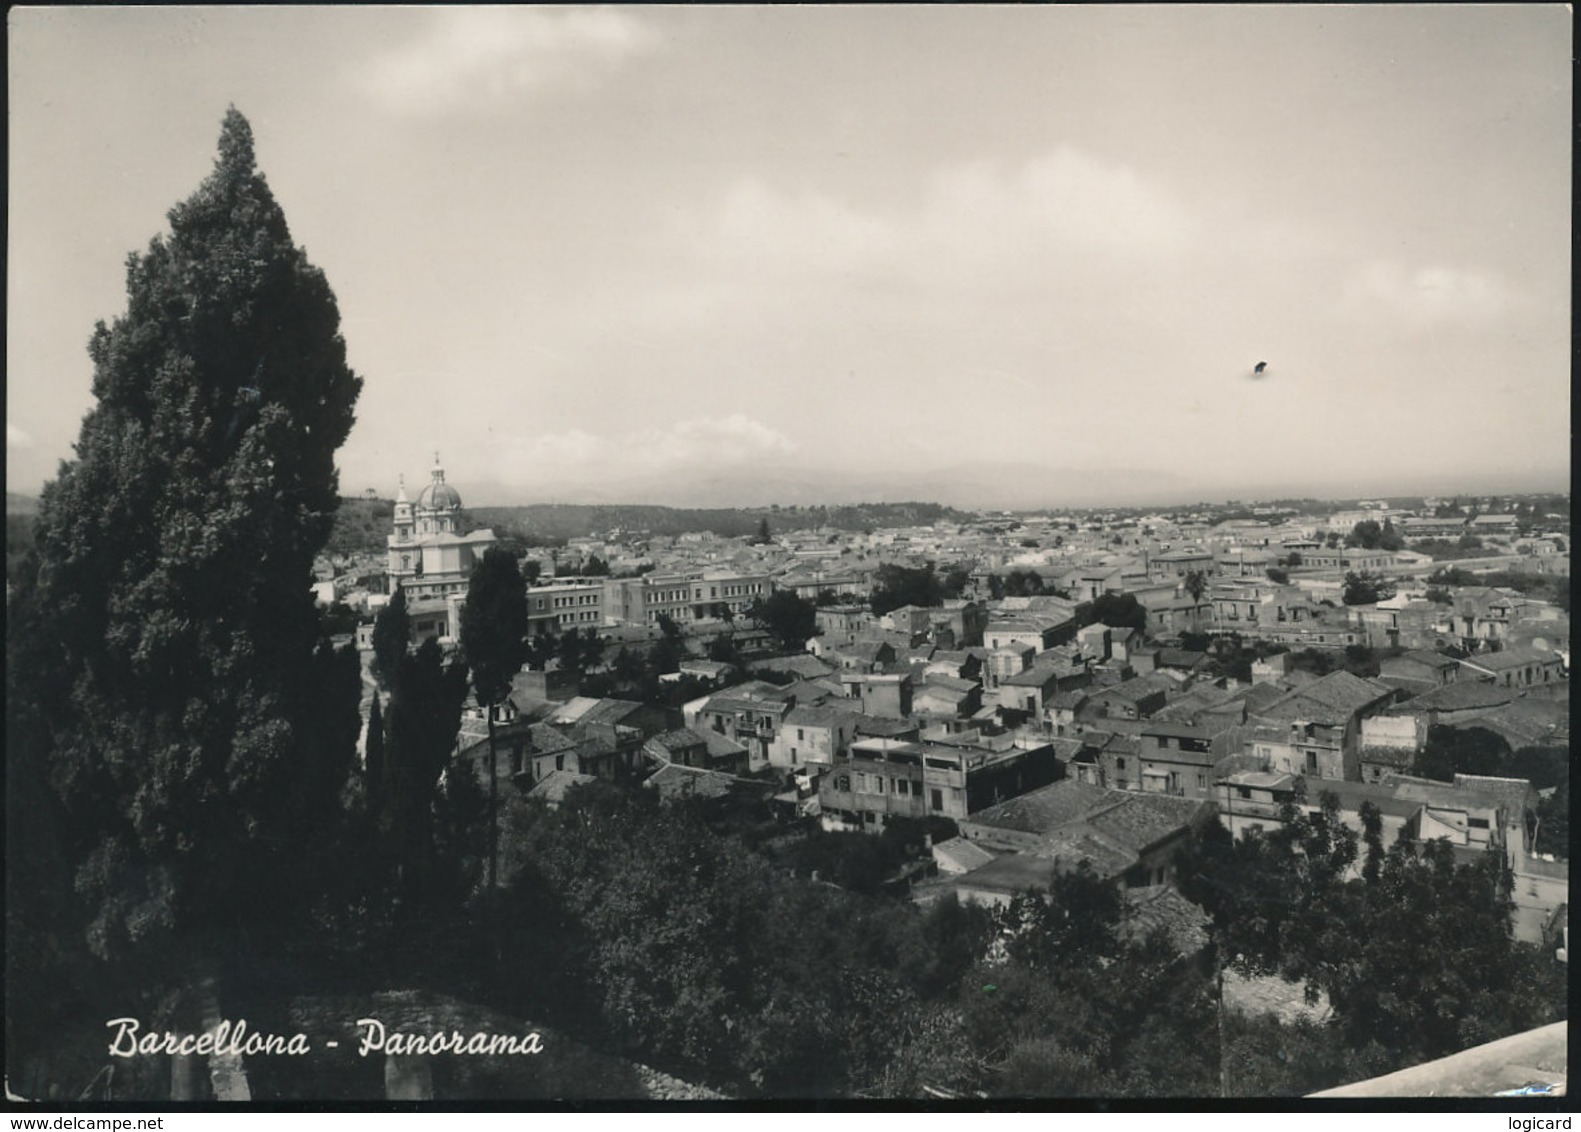 BARCELLONA (MESSINA) - PANORAMA 1955 - Messina